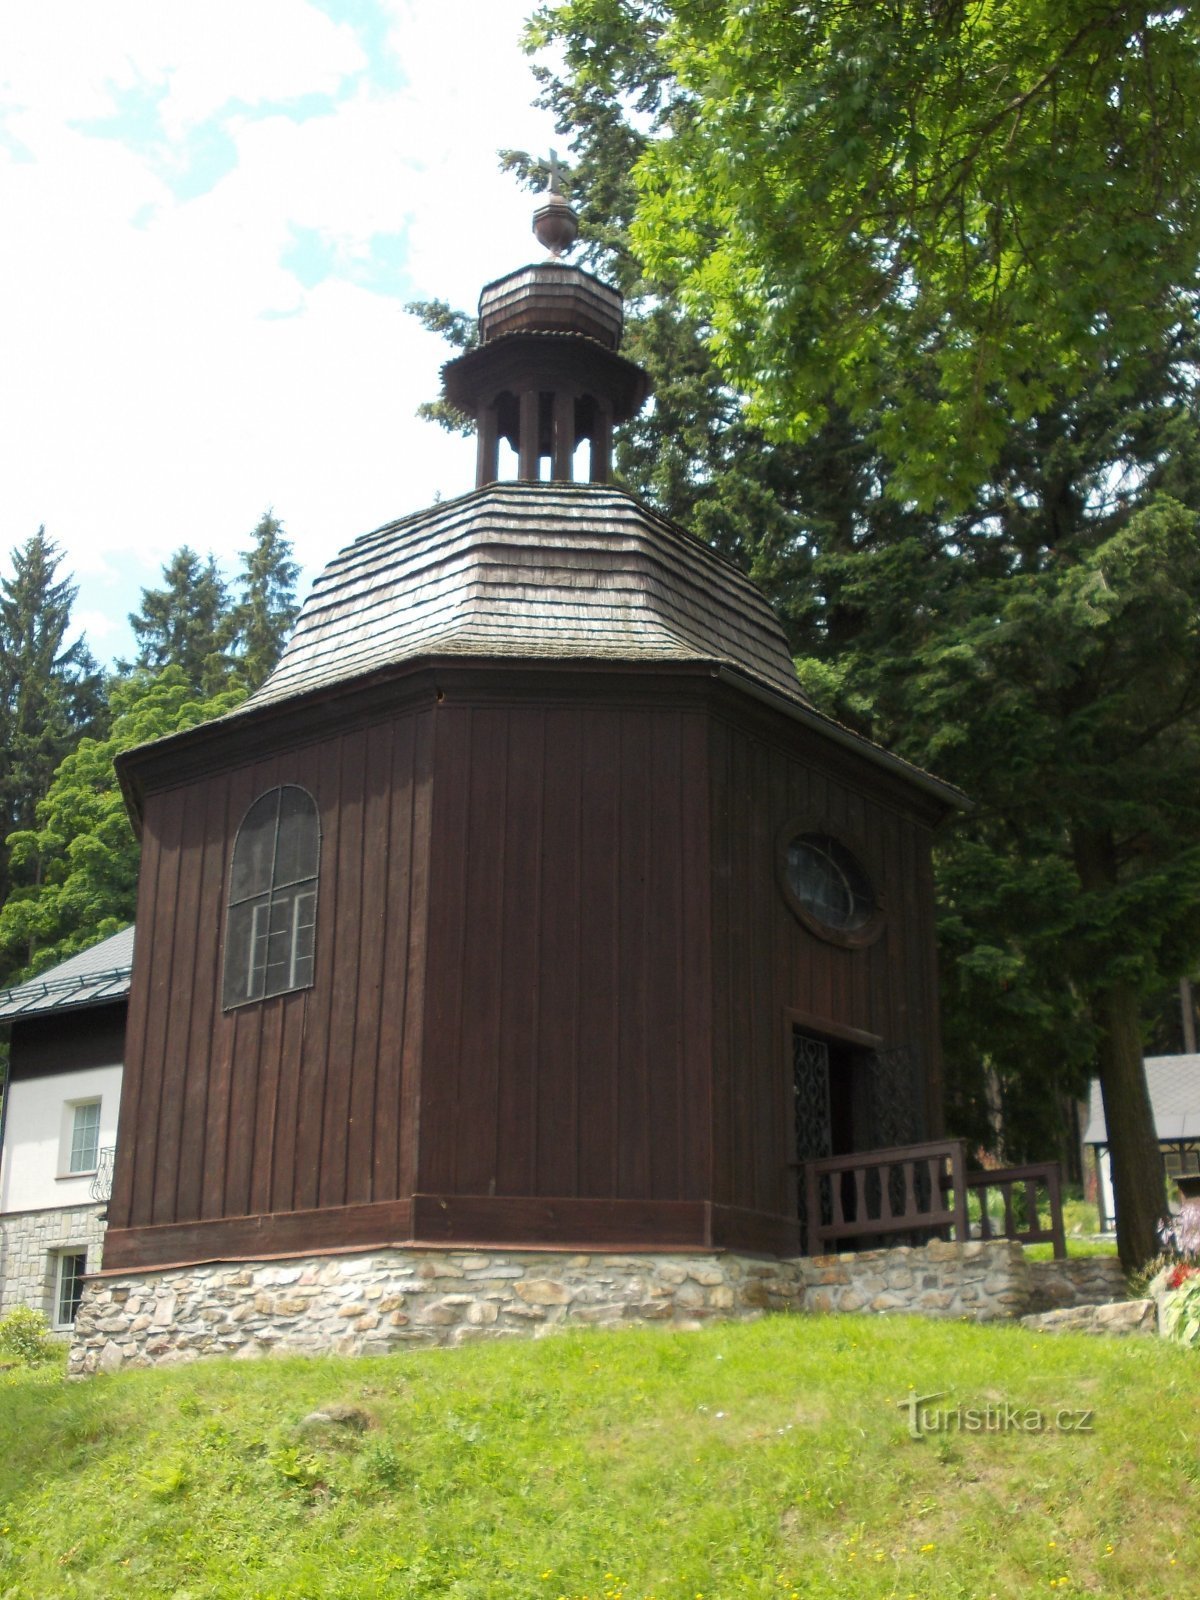 kapel met torentje